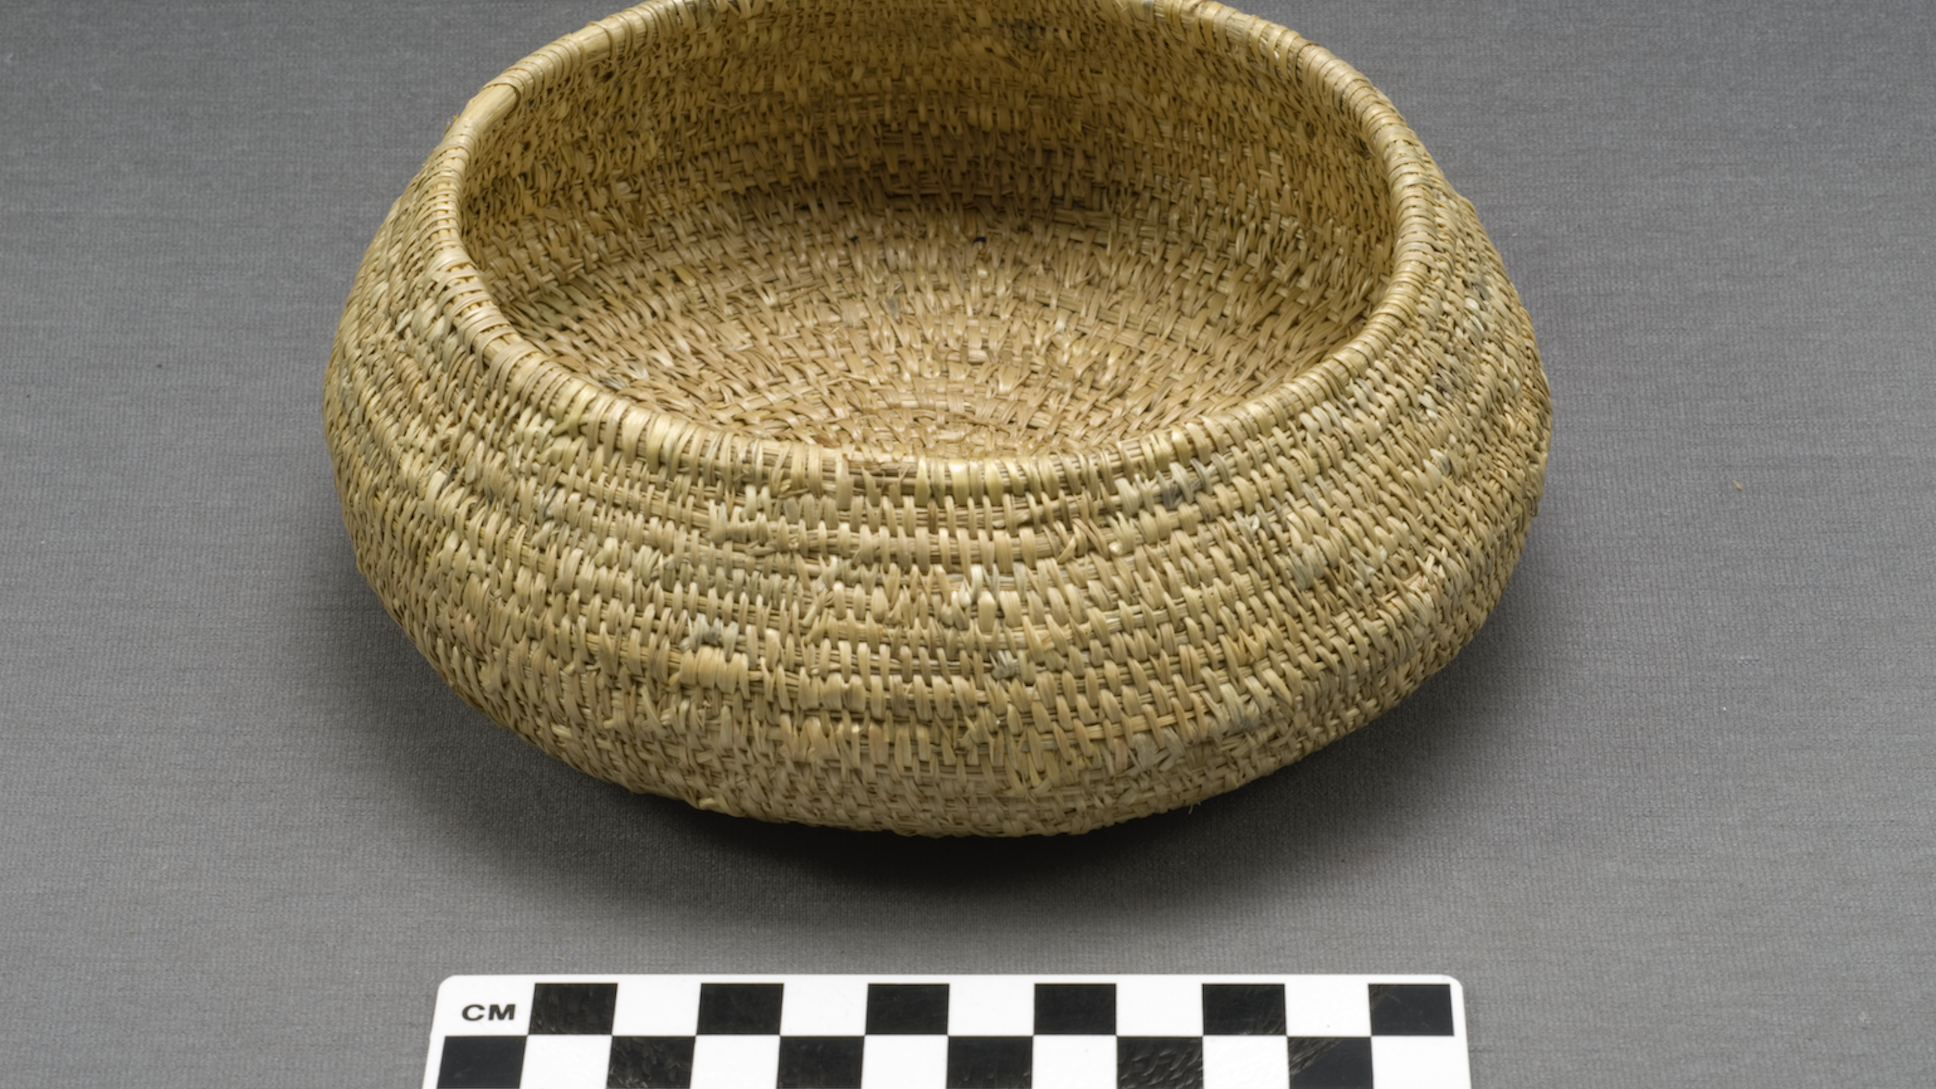 A woven bowl next to a ruler